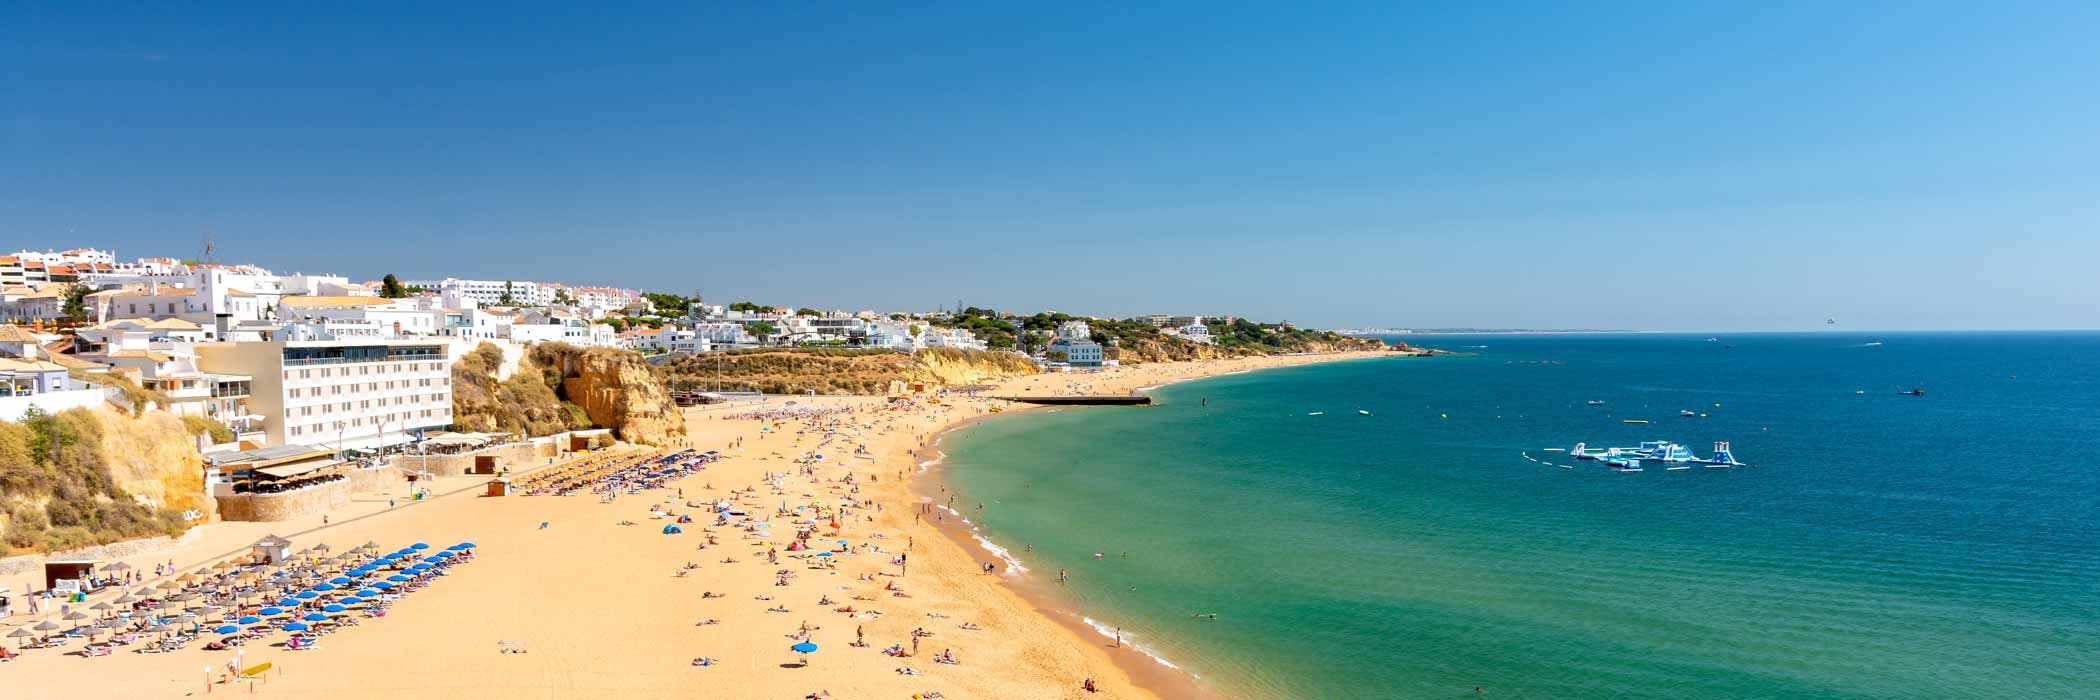 Algarve - Jet2 all inclusive holidays